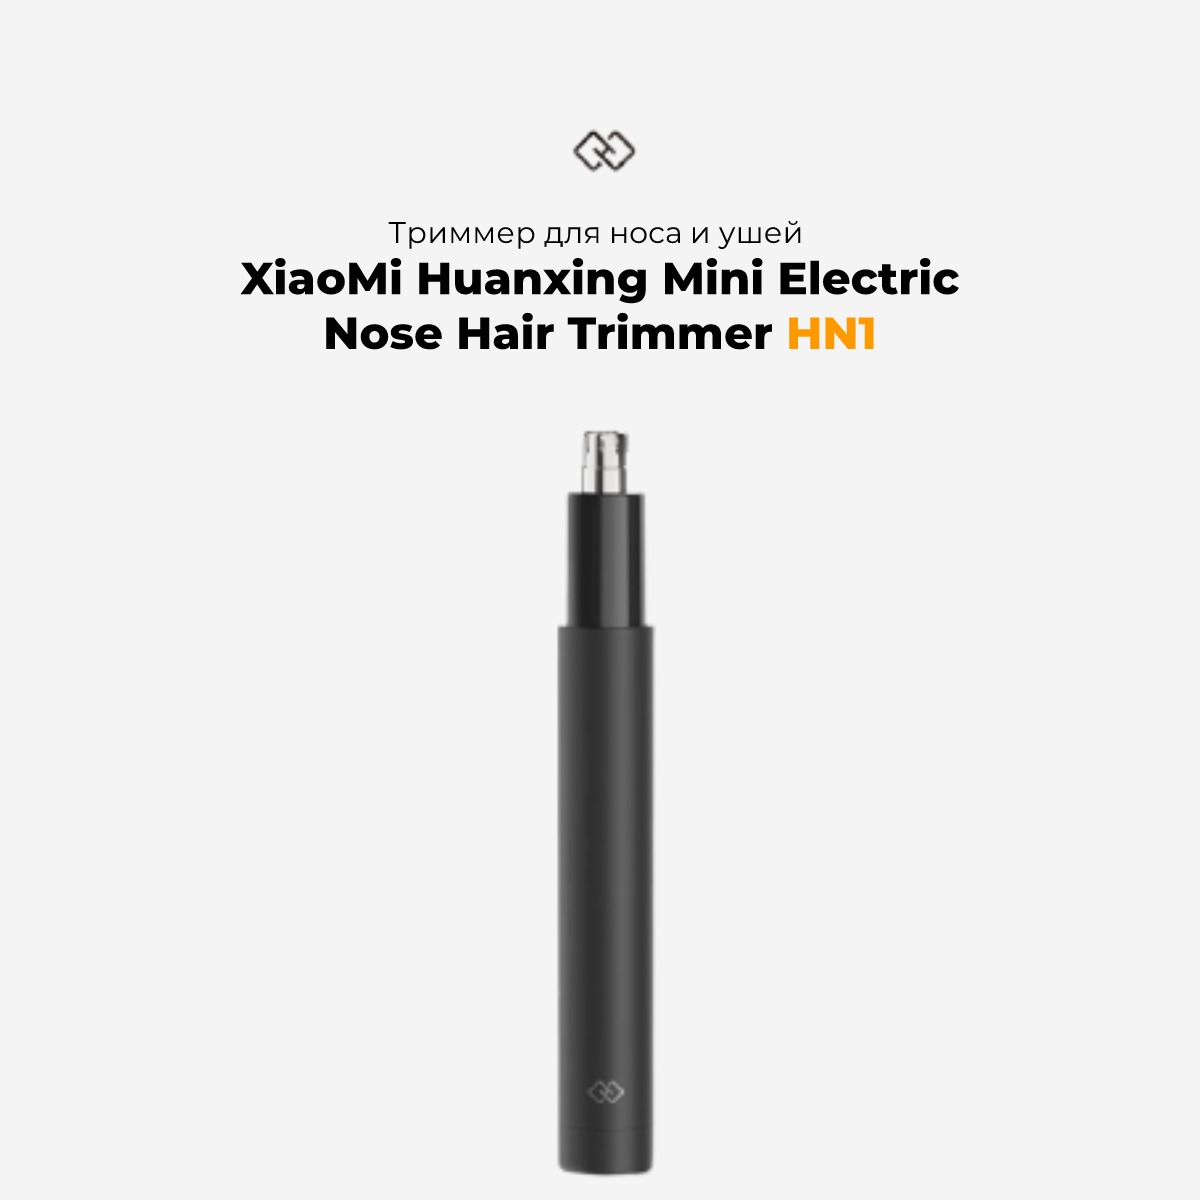 XiaoMi-Huanxing-Mini-Electric-Nose-Hair-Trimmer-HN1-01